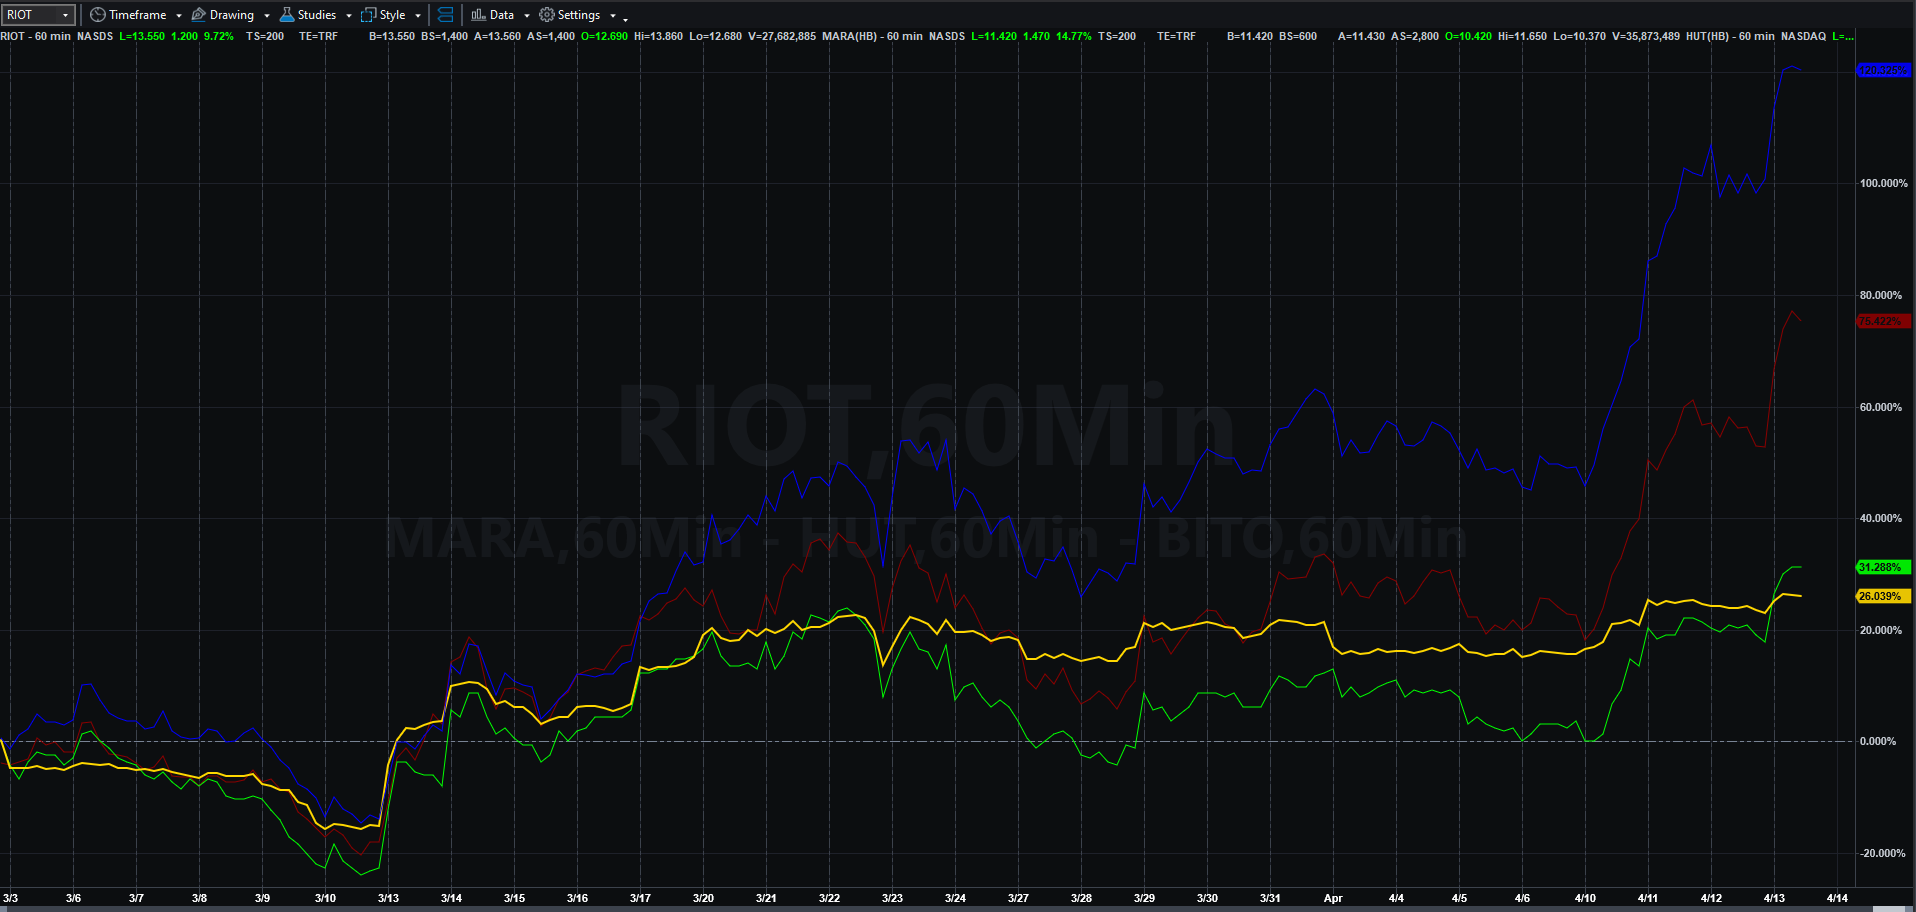 Roblox Corp (NYSE: RBLX): Will Roblox Stock Price Reach $50? - The Coin  Republic